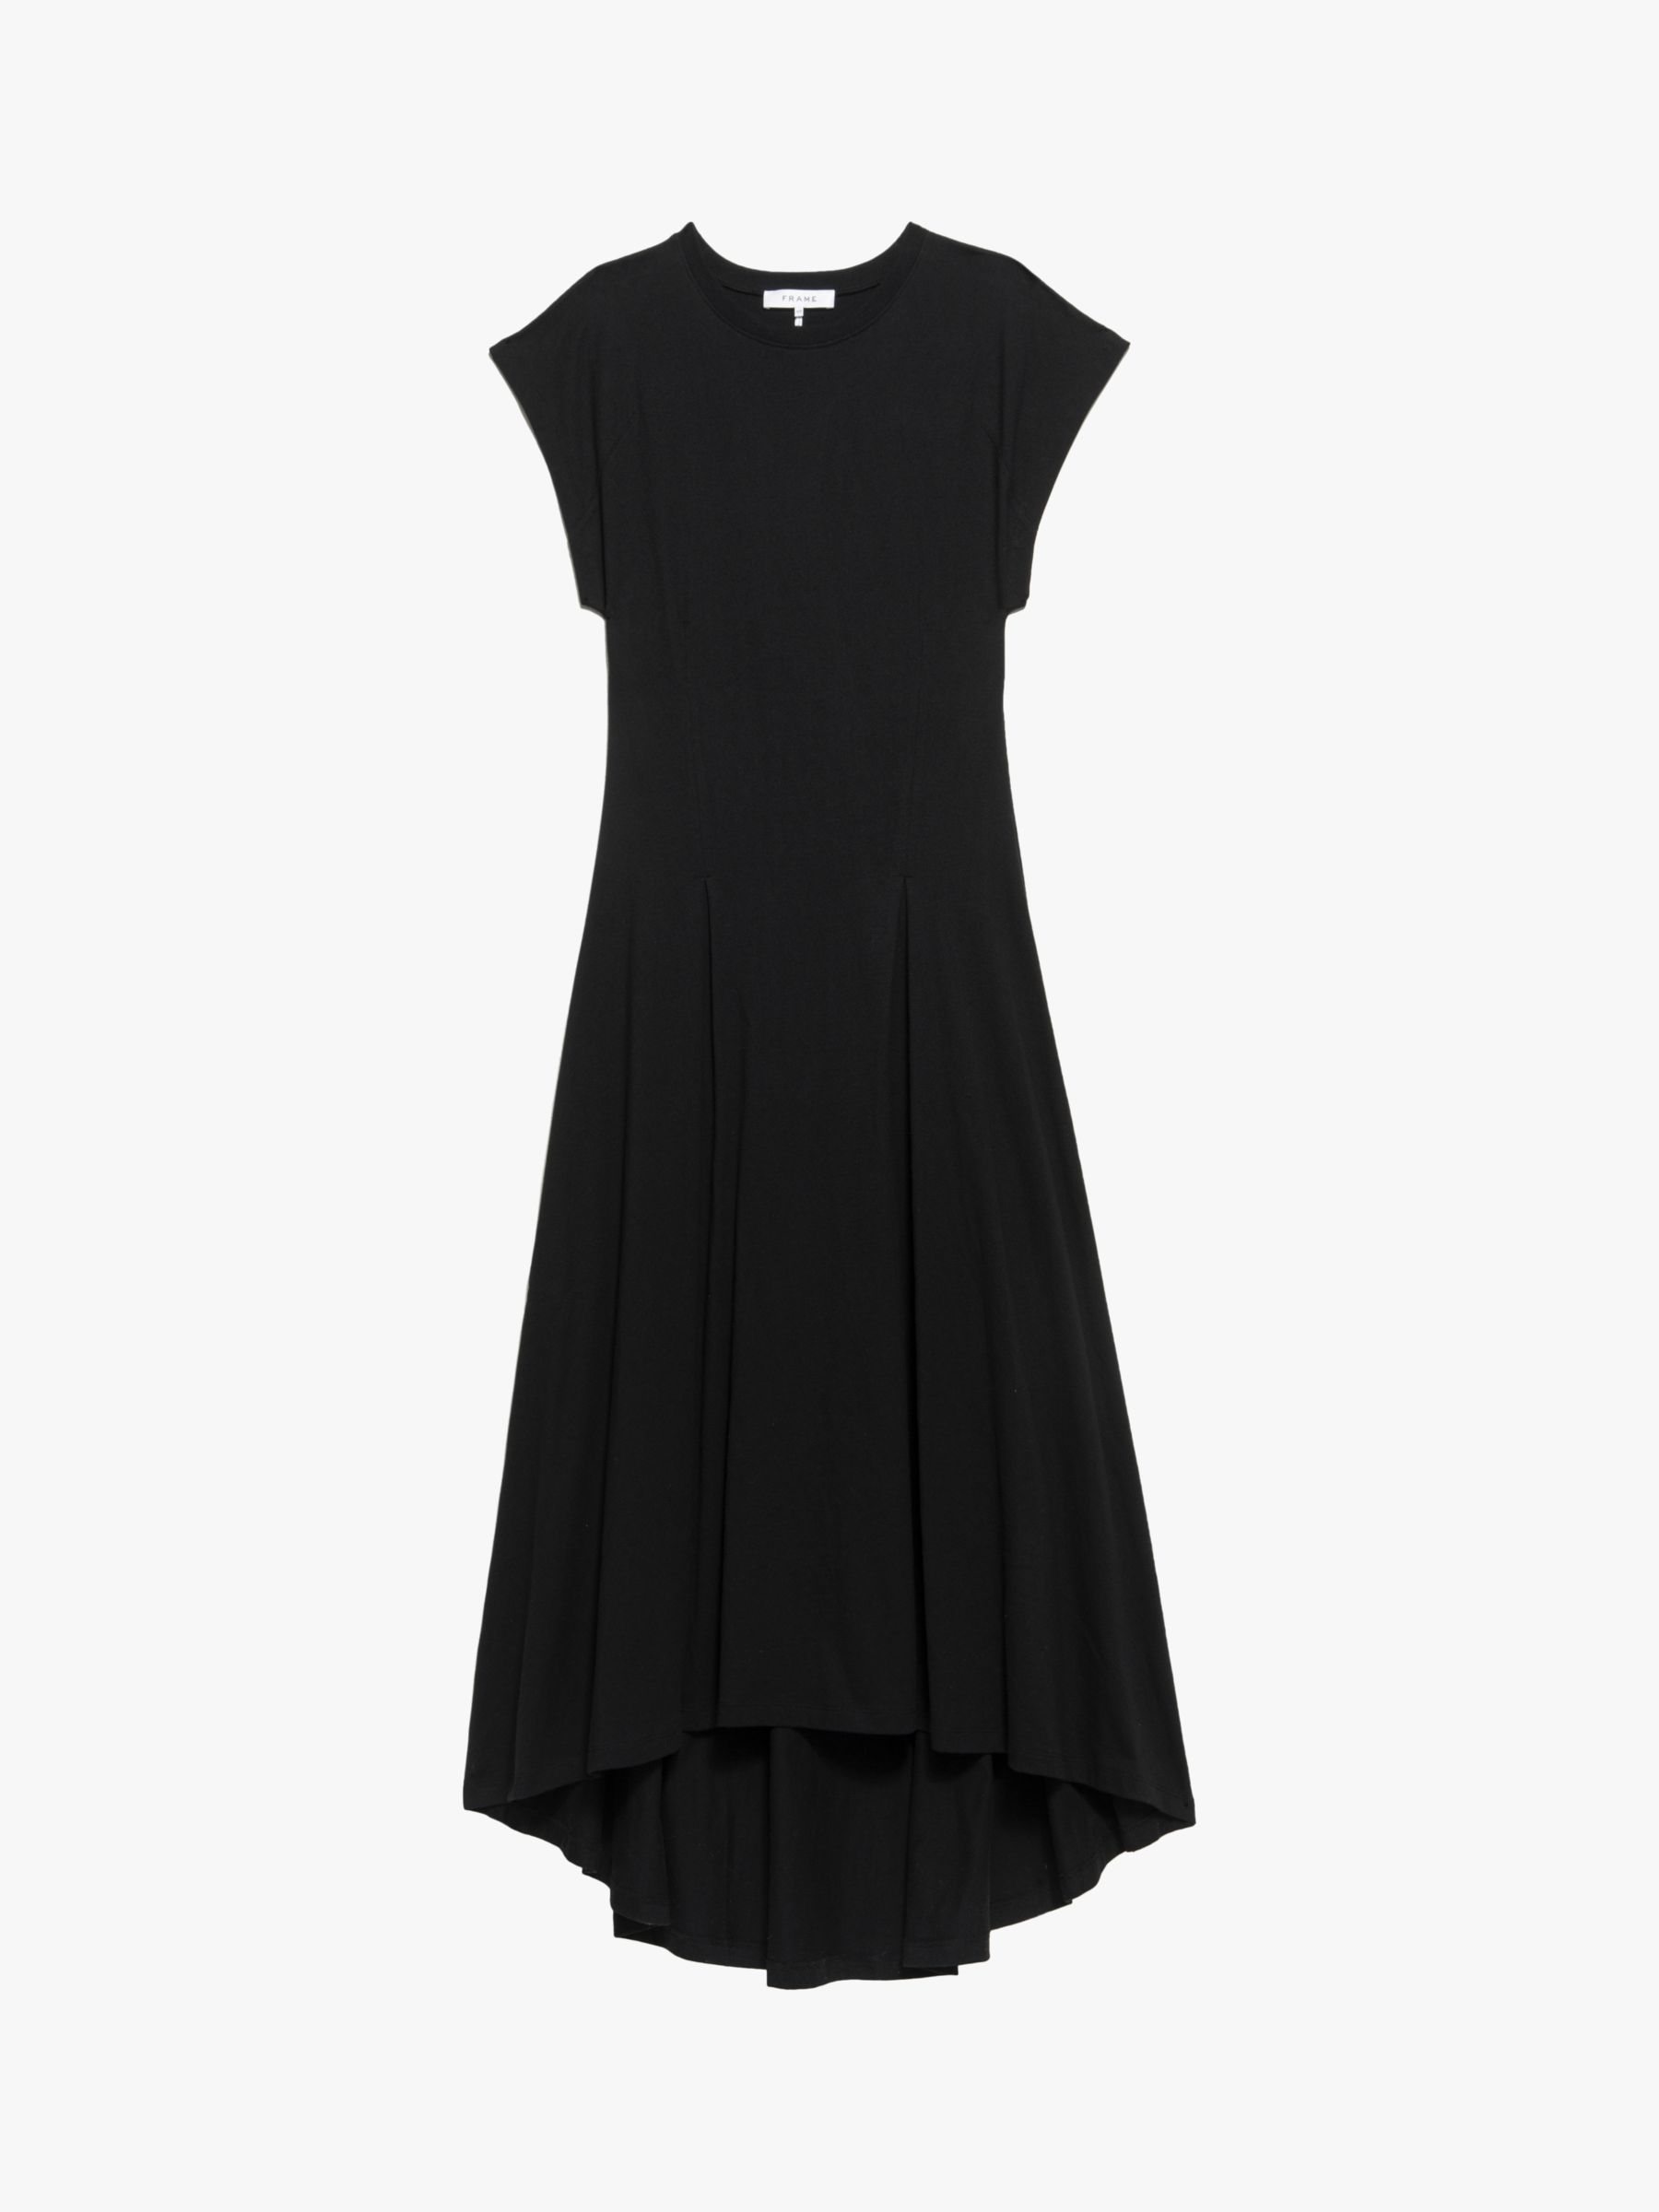 FRAME Plain Fitted Flare Cap Sleeve Dress, Noir at John Lewis & Partners